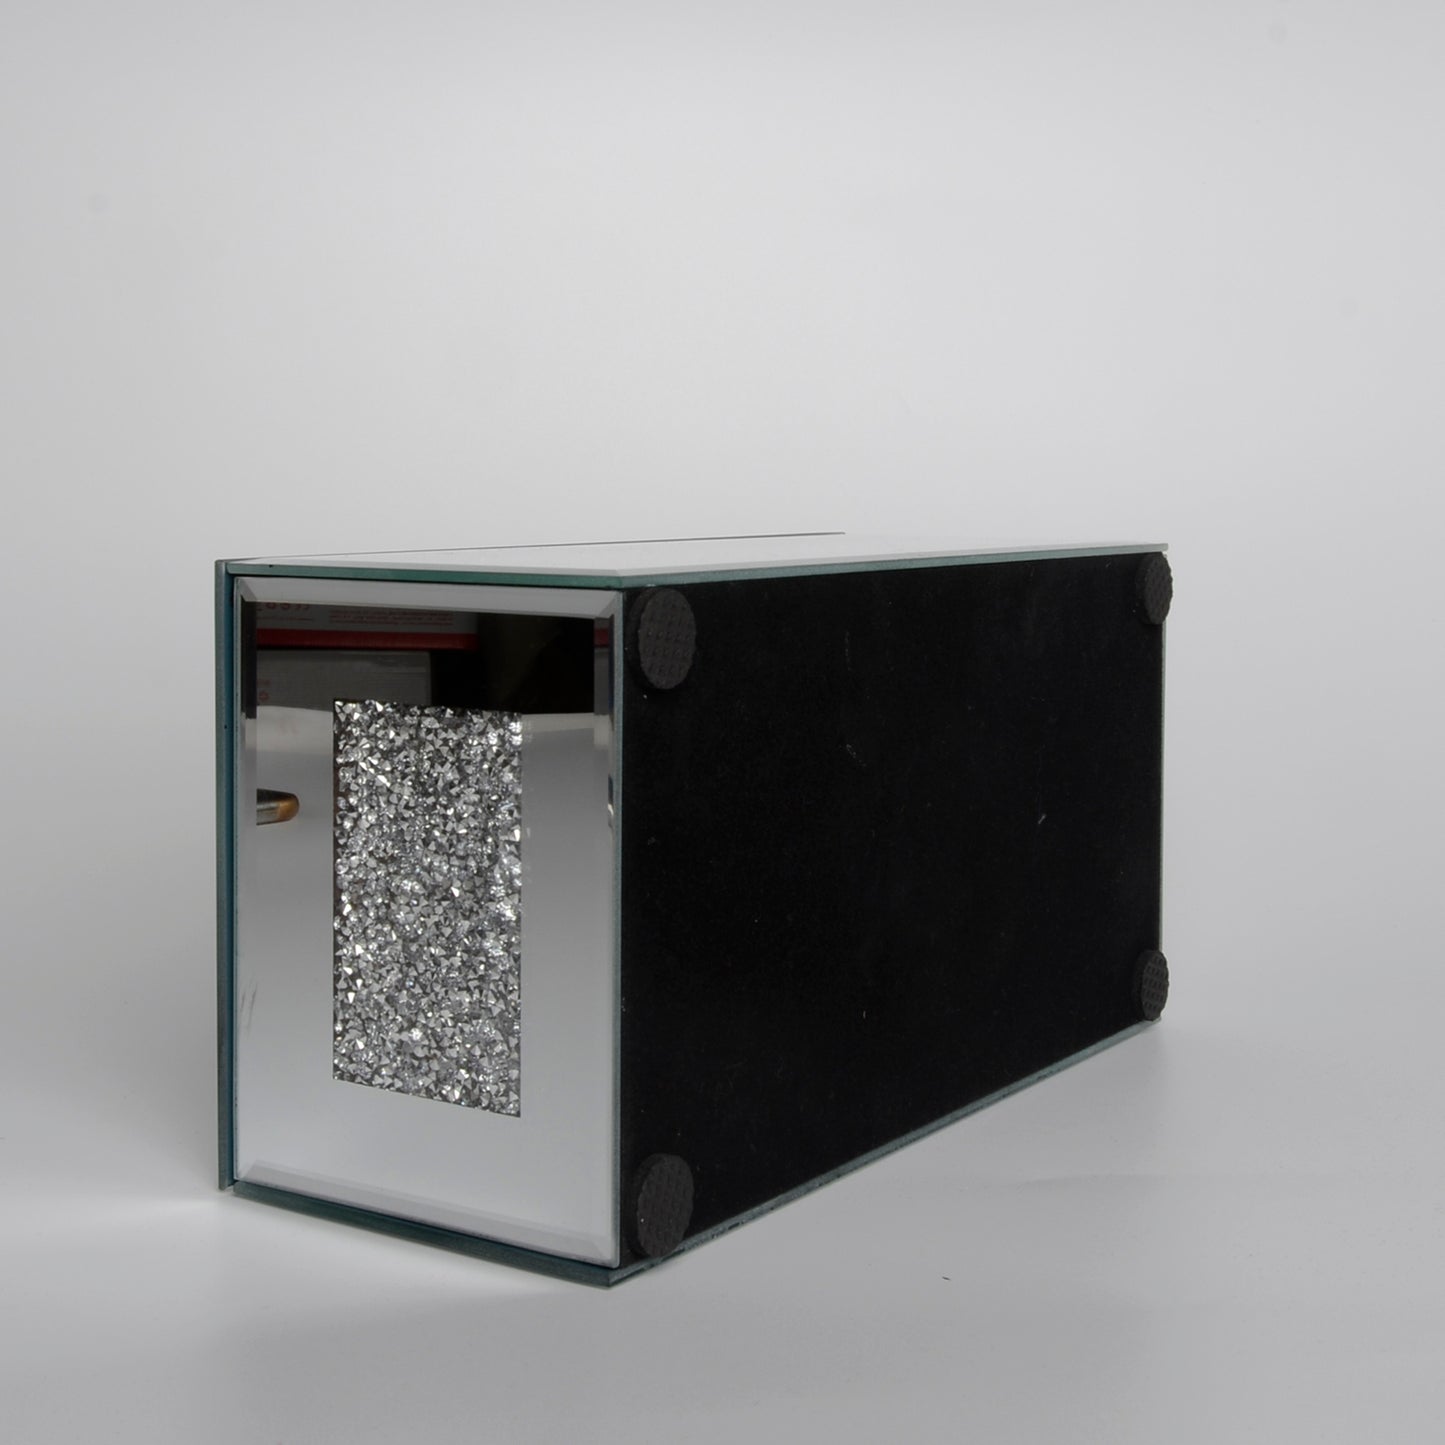 Ambrose Exquisite Mirrored Tissue Holder in Gift Box Bathroom Accessories